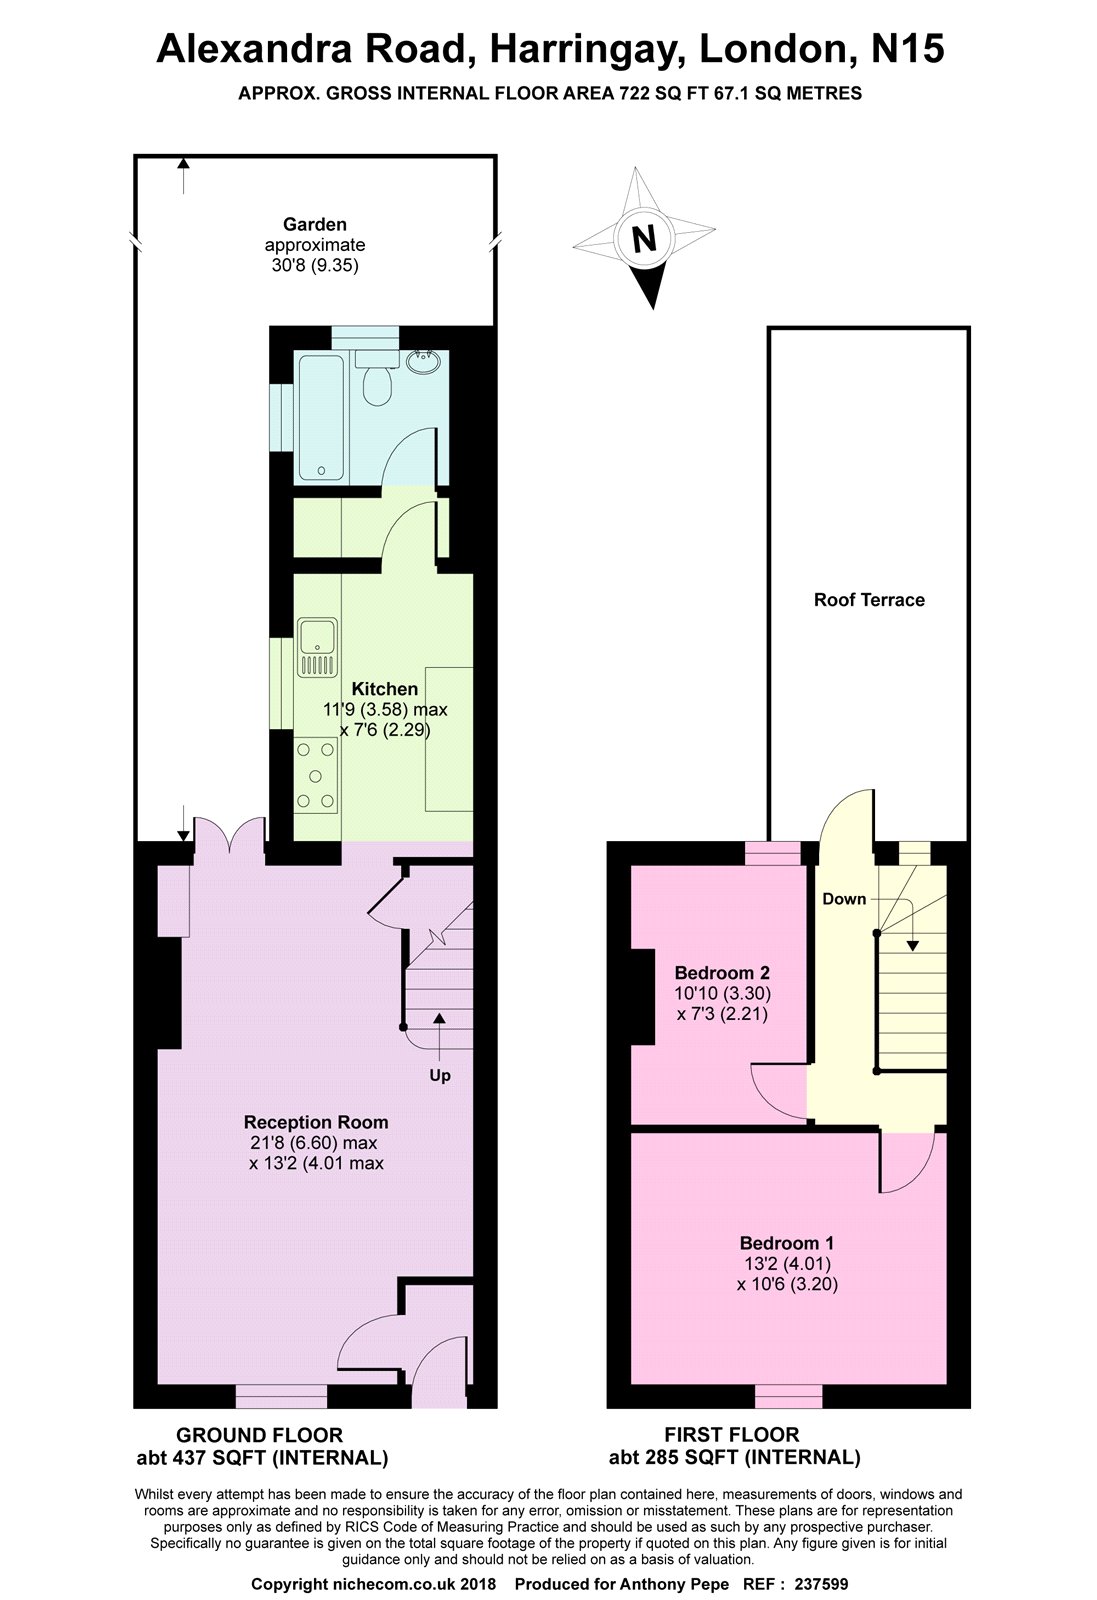 2 Bedrooms Terraced house to rent in Alexandra Road, Harringay, London N15